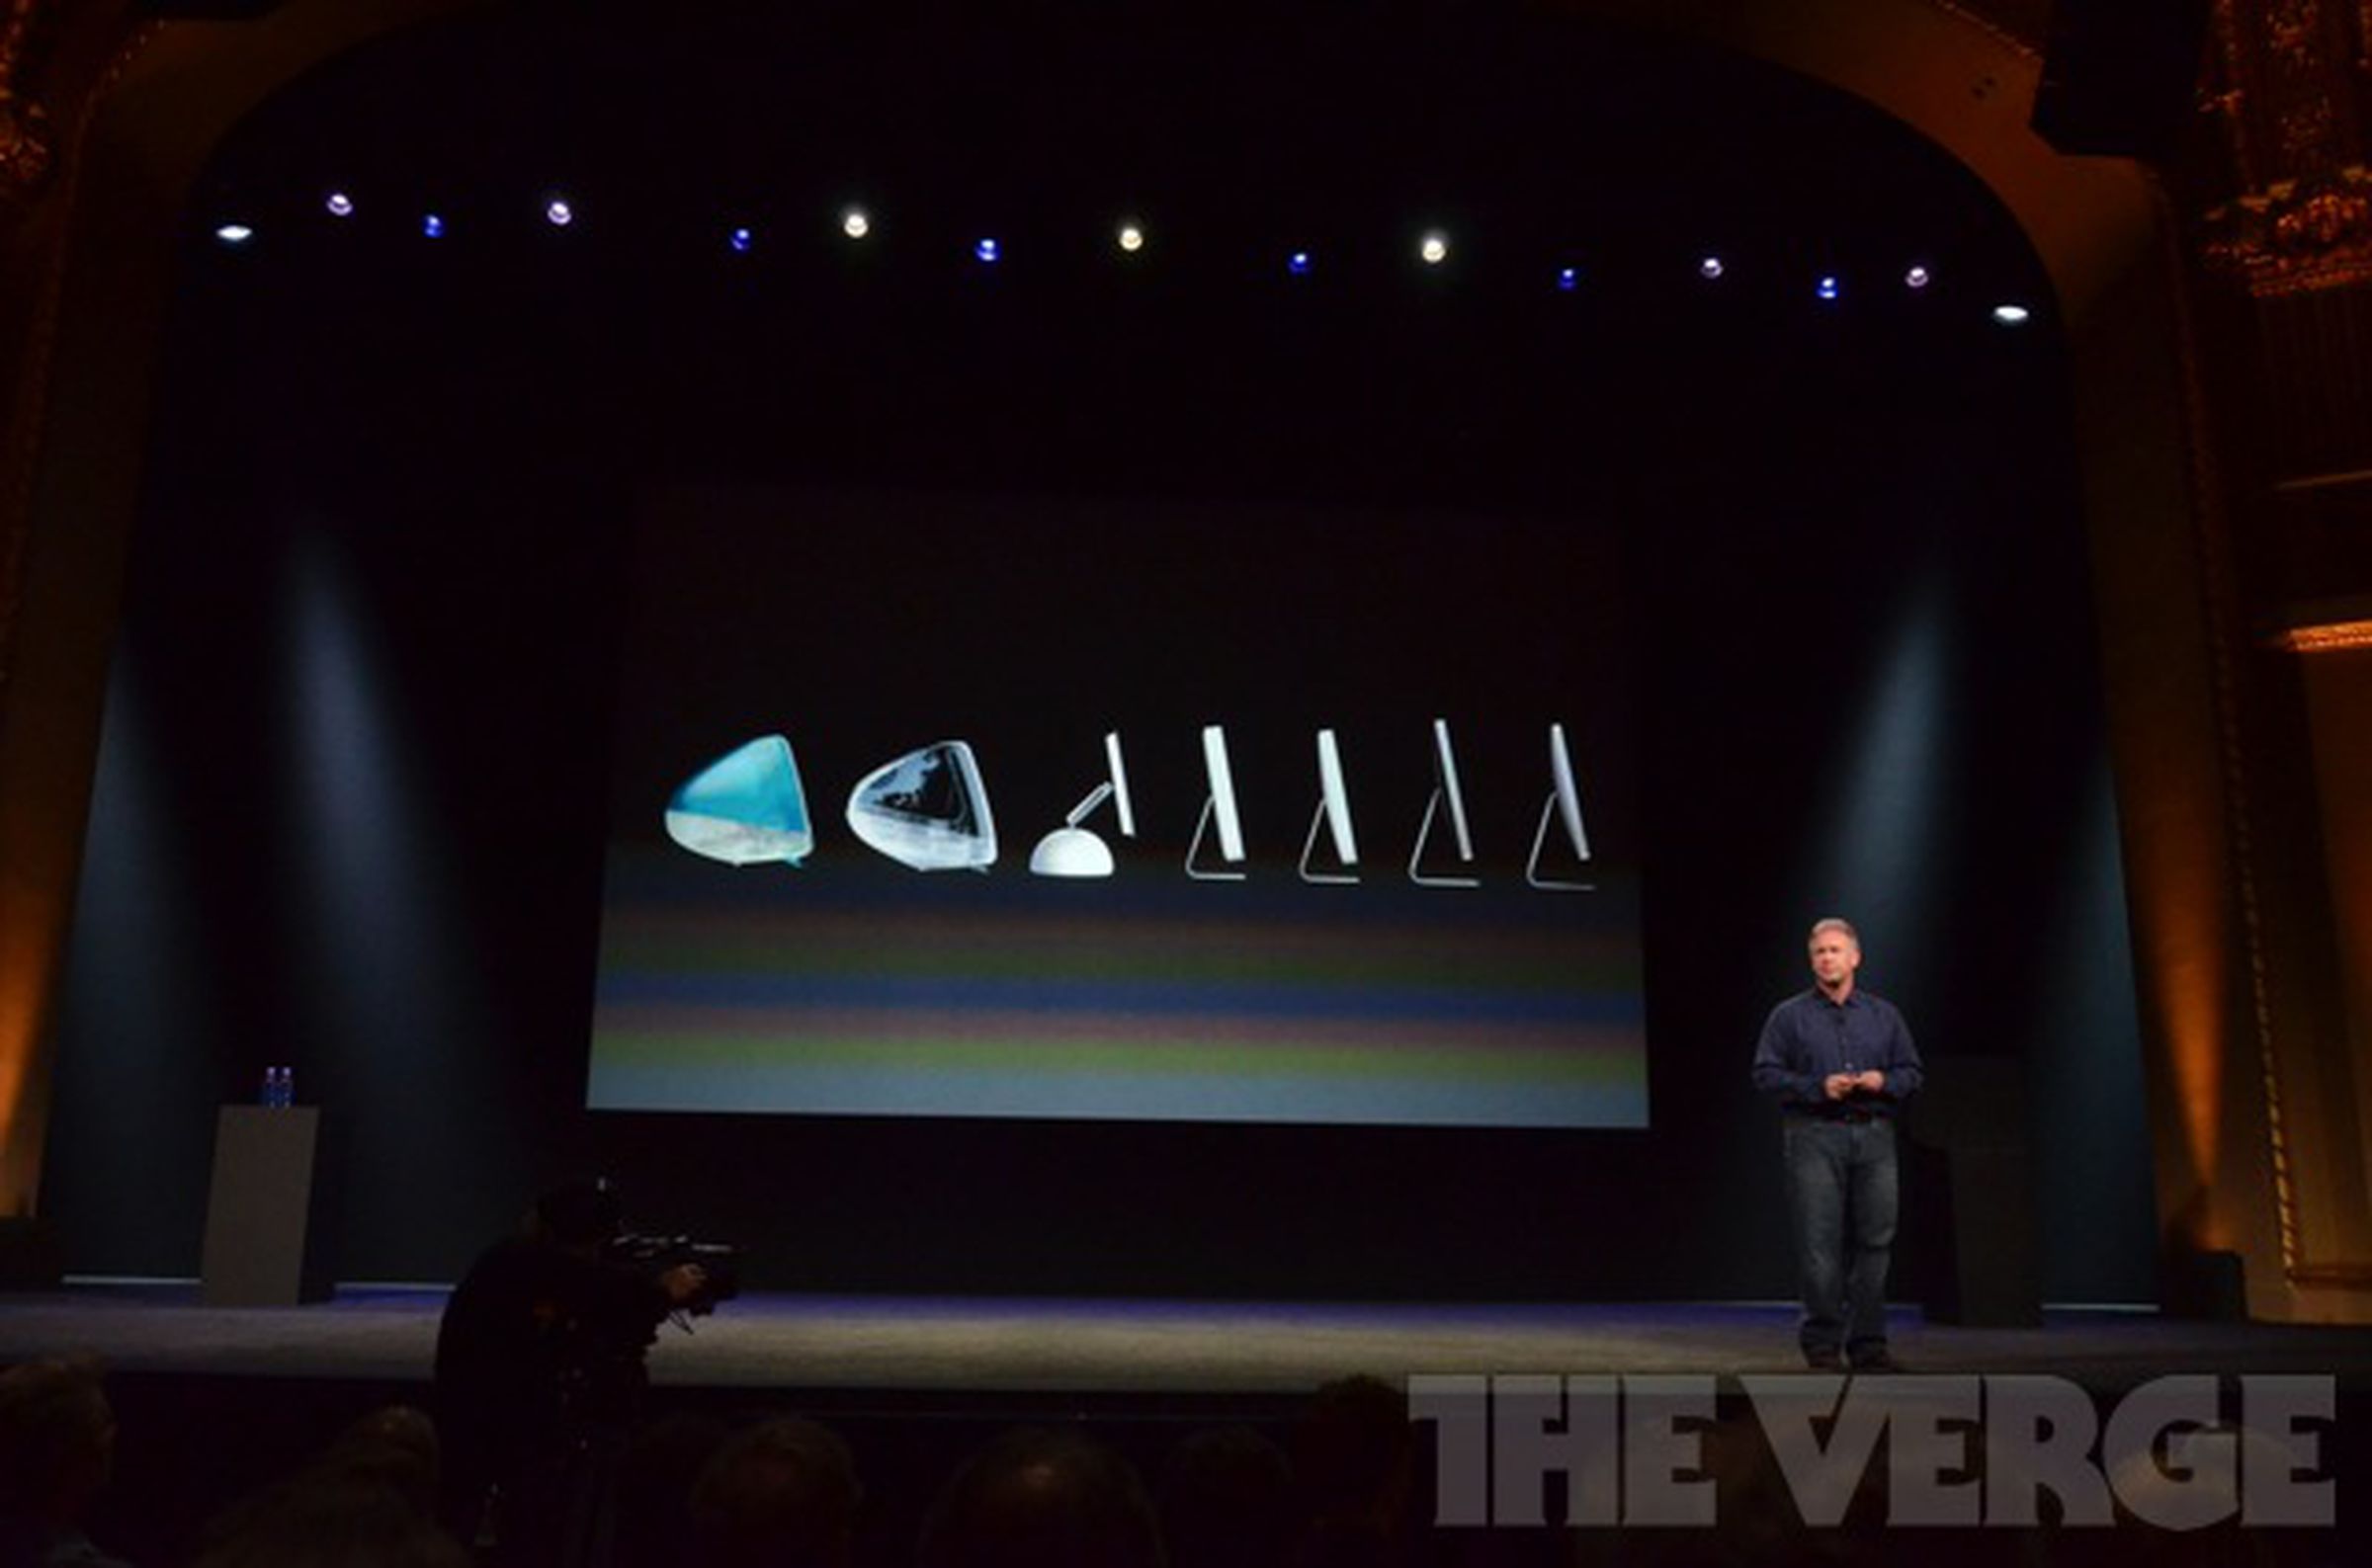 Apple's new iMac liveblog photos